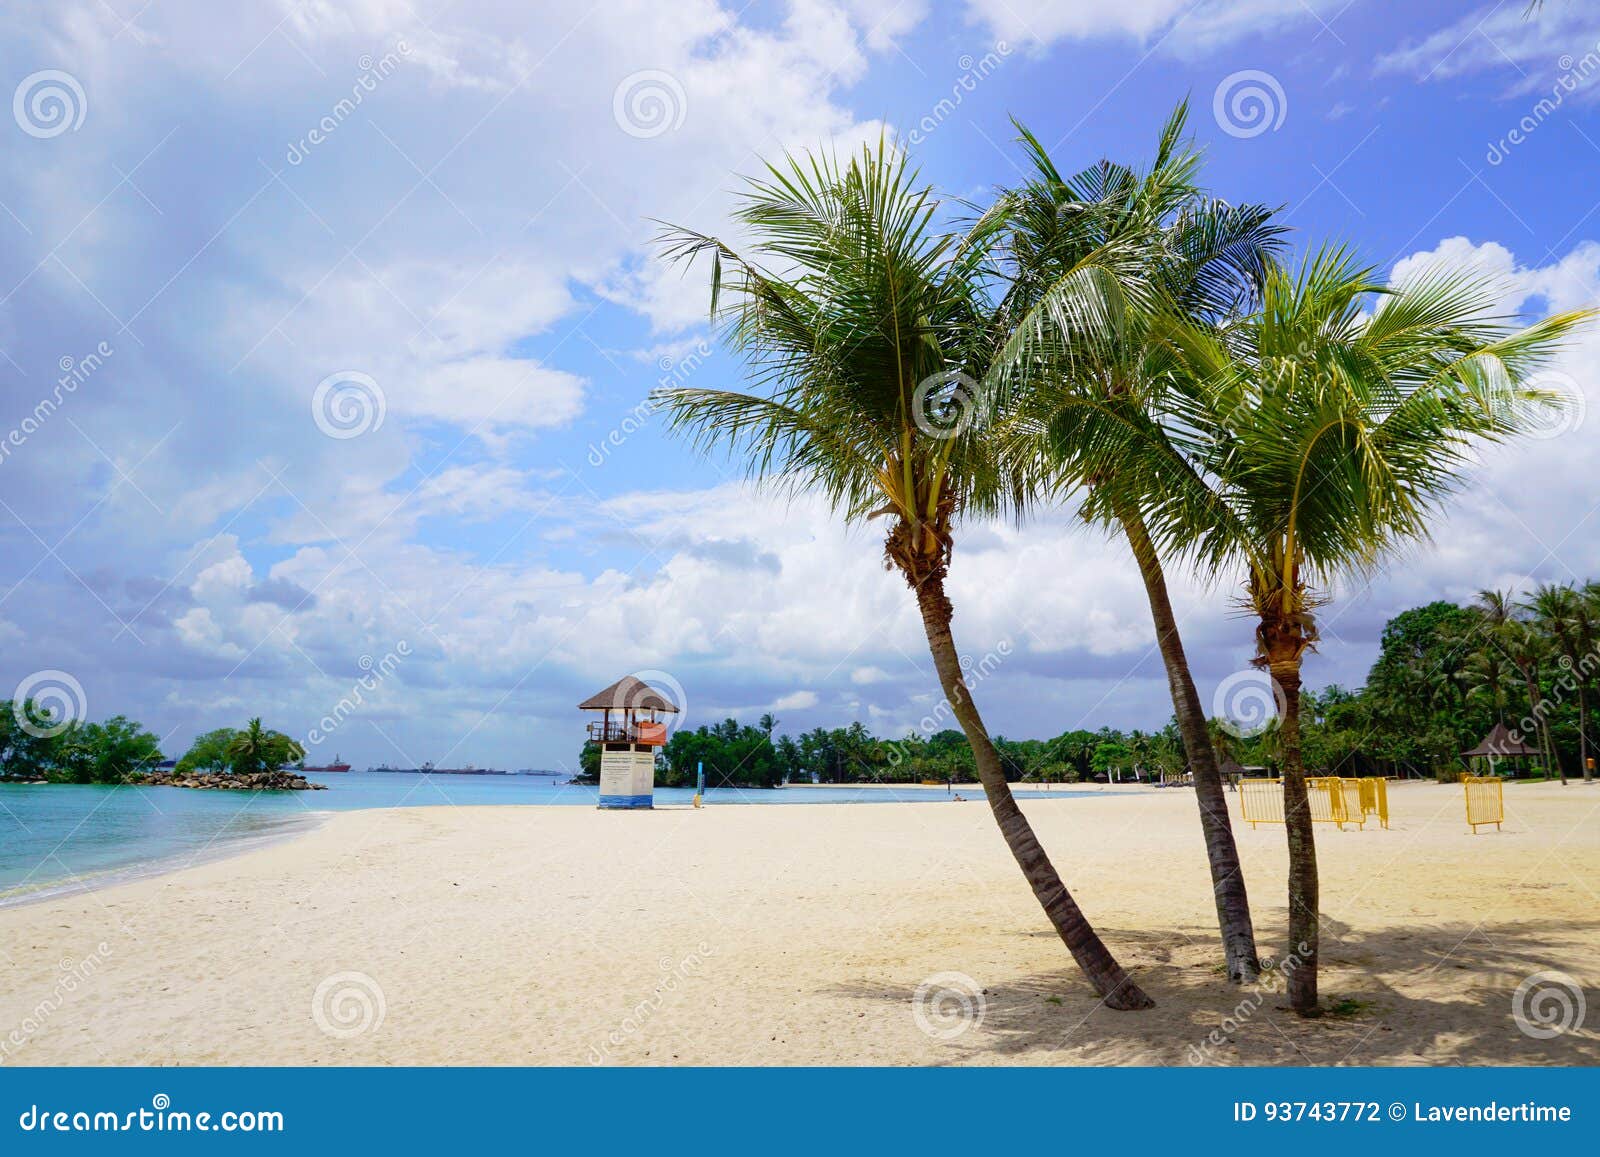 tanjong beach of sentosa island